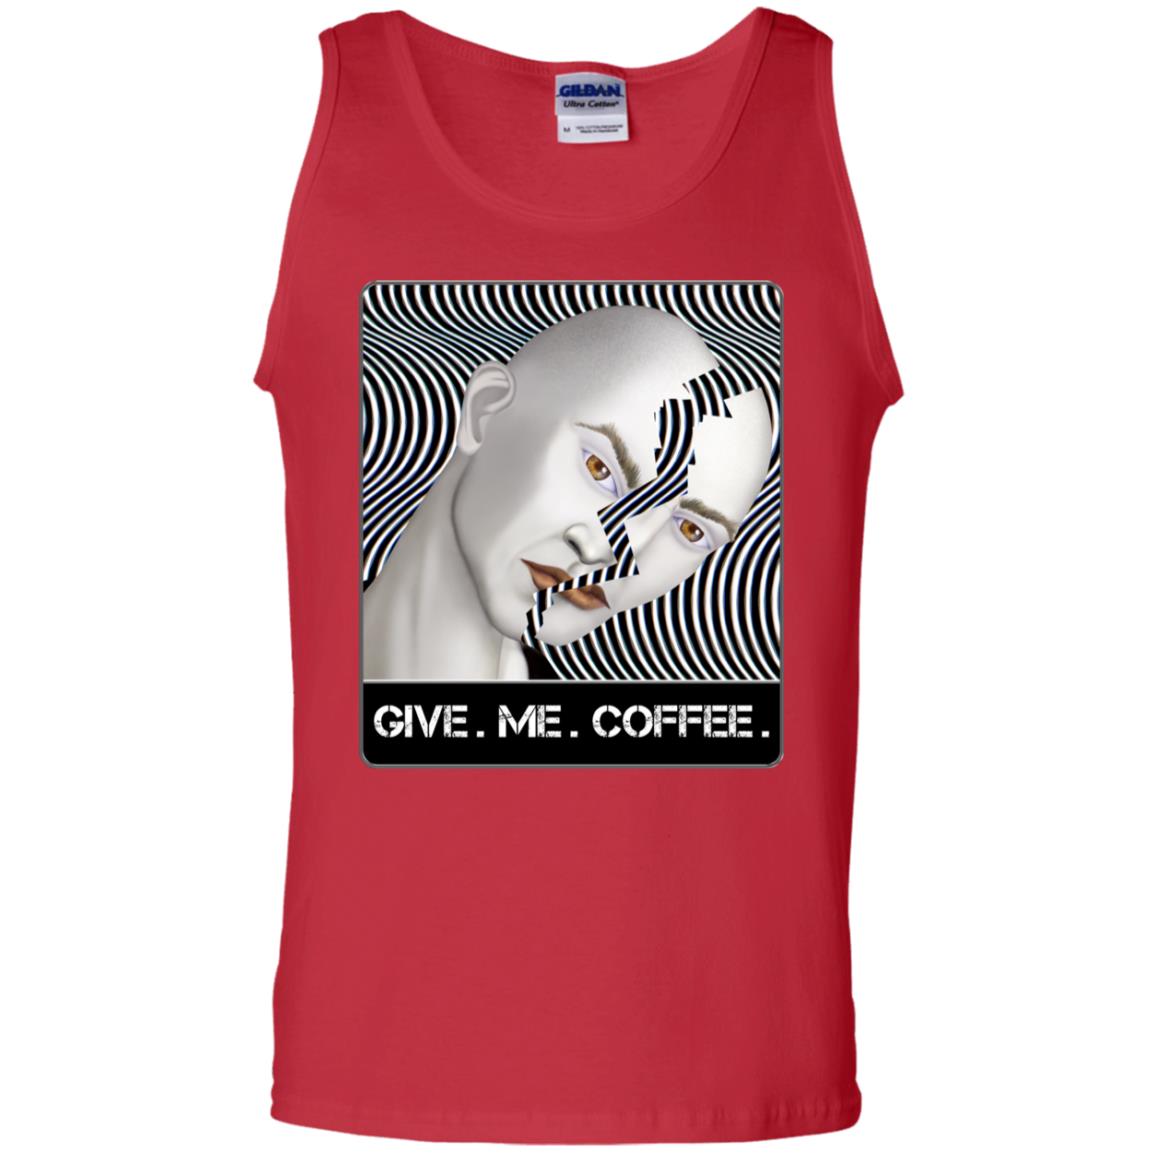 GIVE. ME. COFFEE. - Men's Tank Top